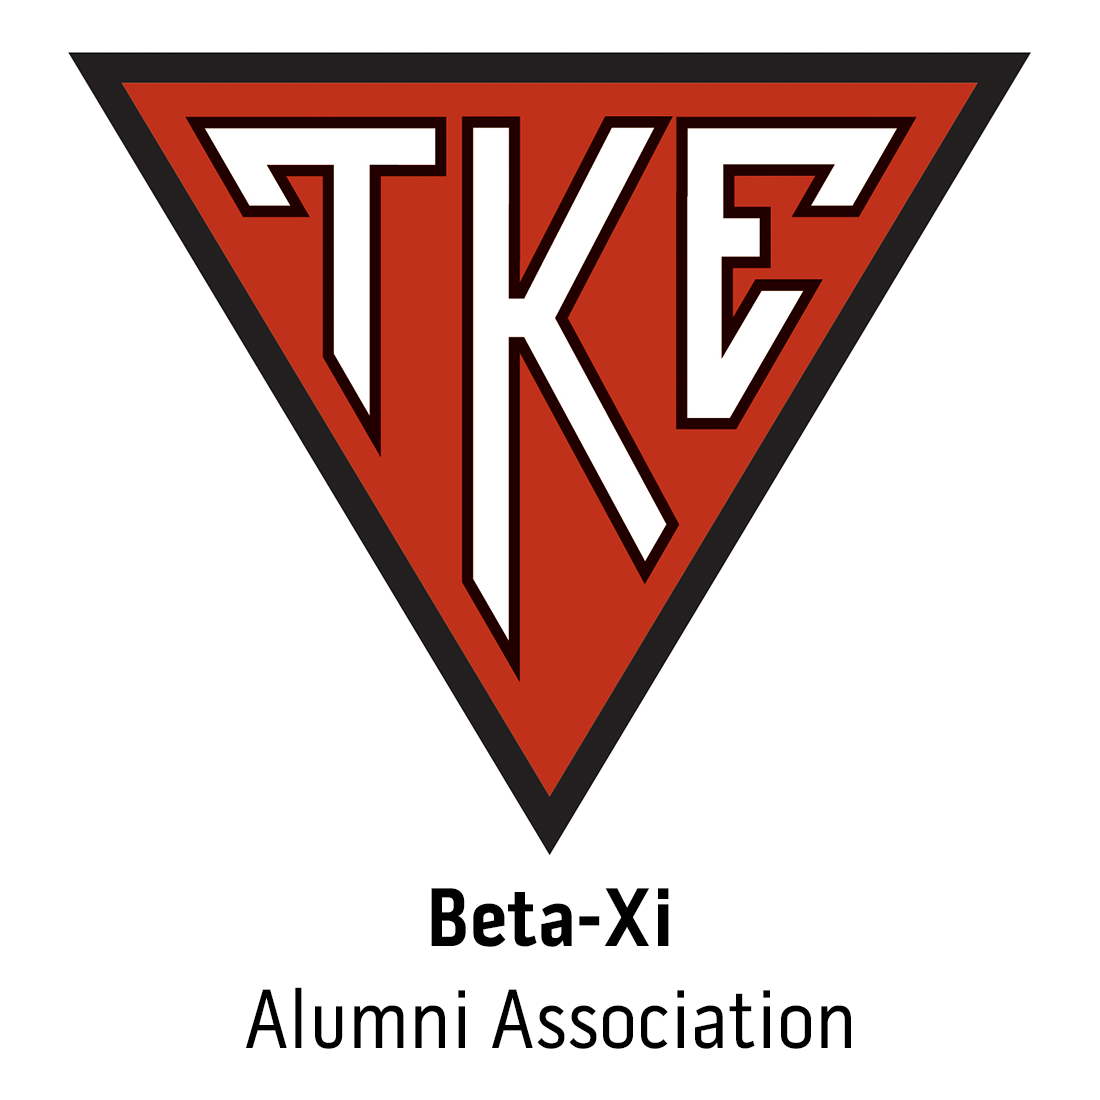 Beta-Xi Alumni Association for Arizona State University